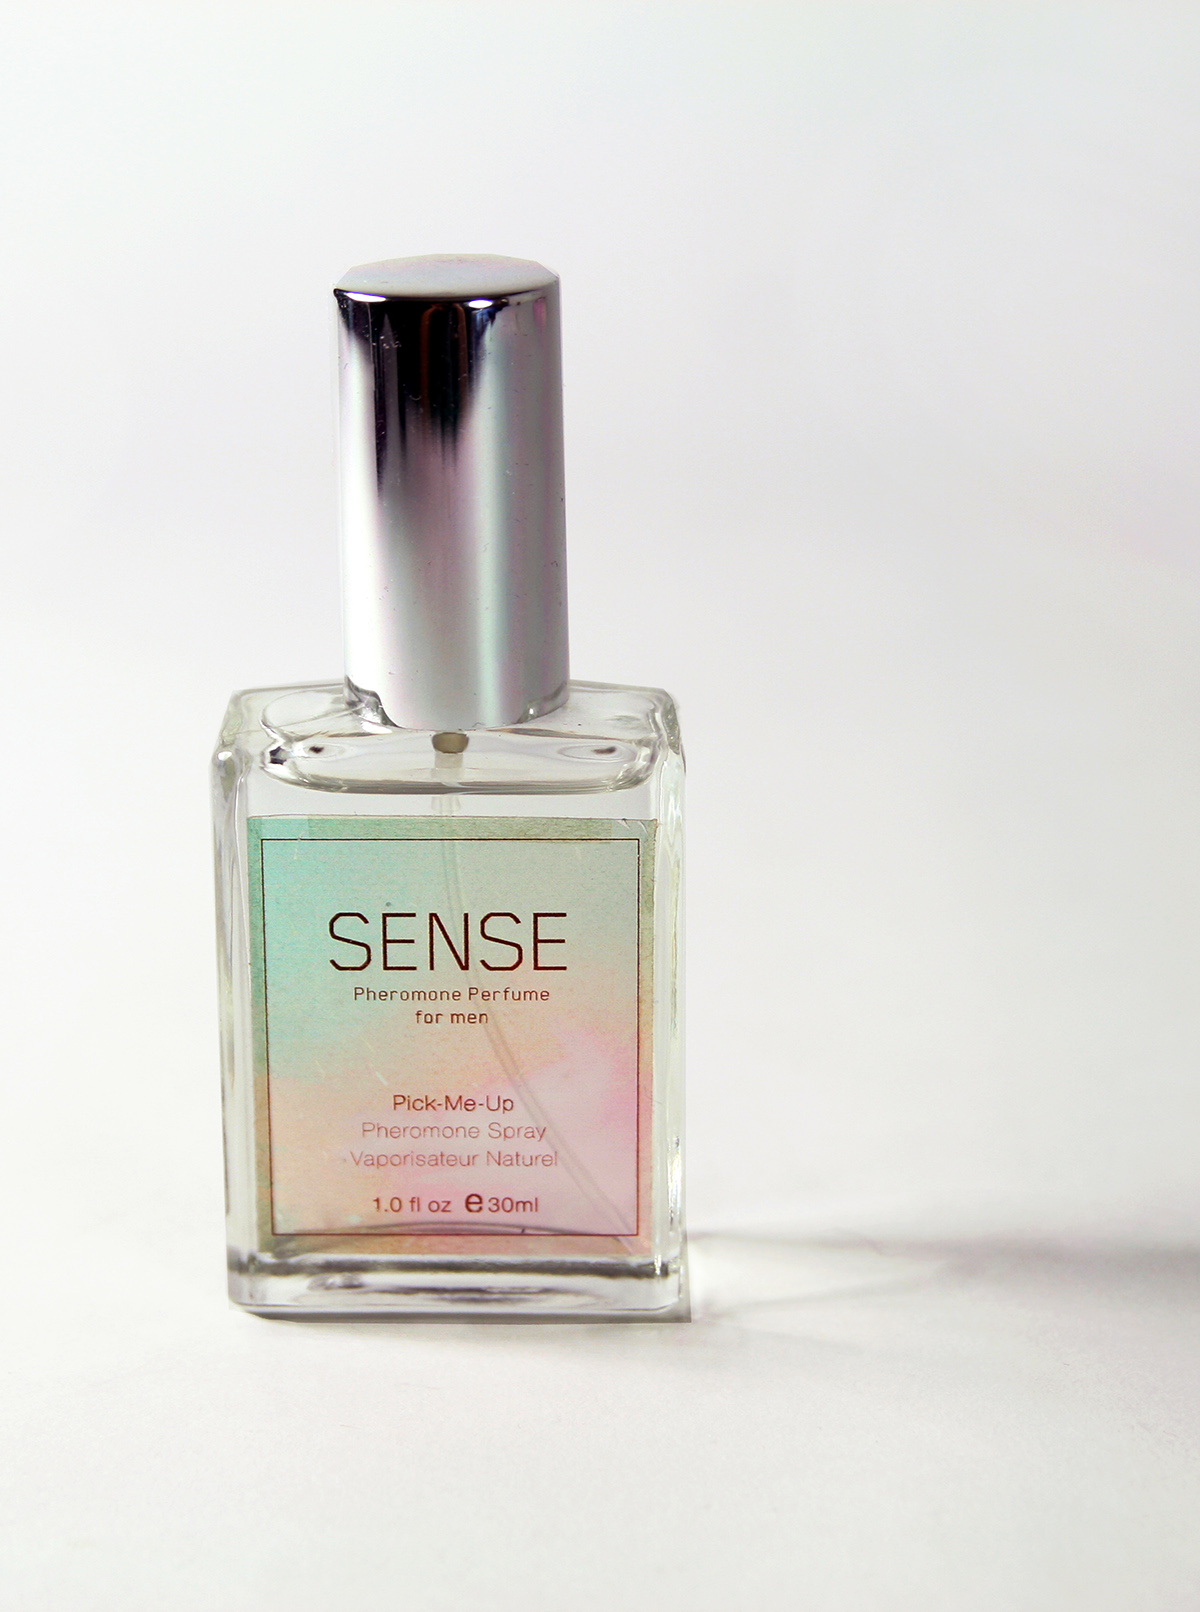 Sense perfume pheromone magazine infograpgic